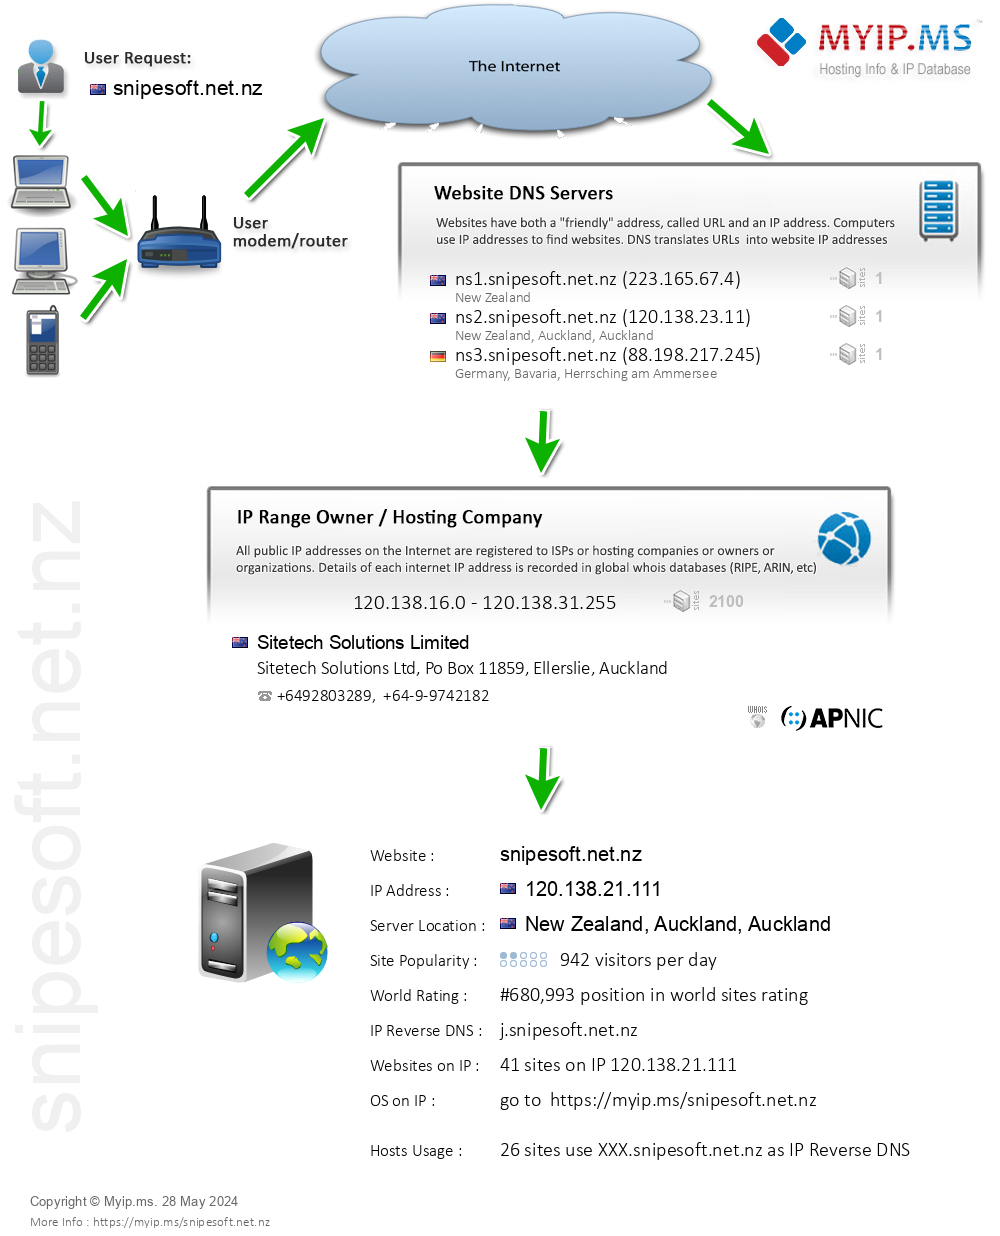 Snipesoft.net.nz - Website Hosting Visual IP Diagram